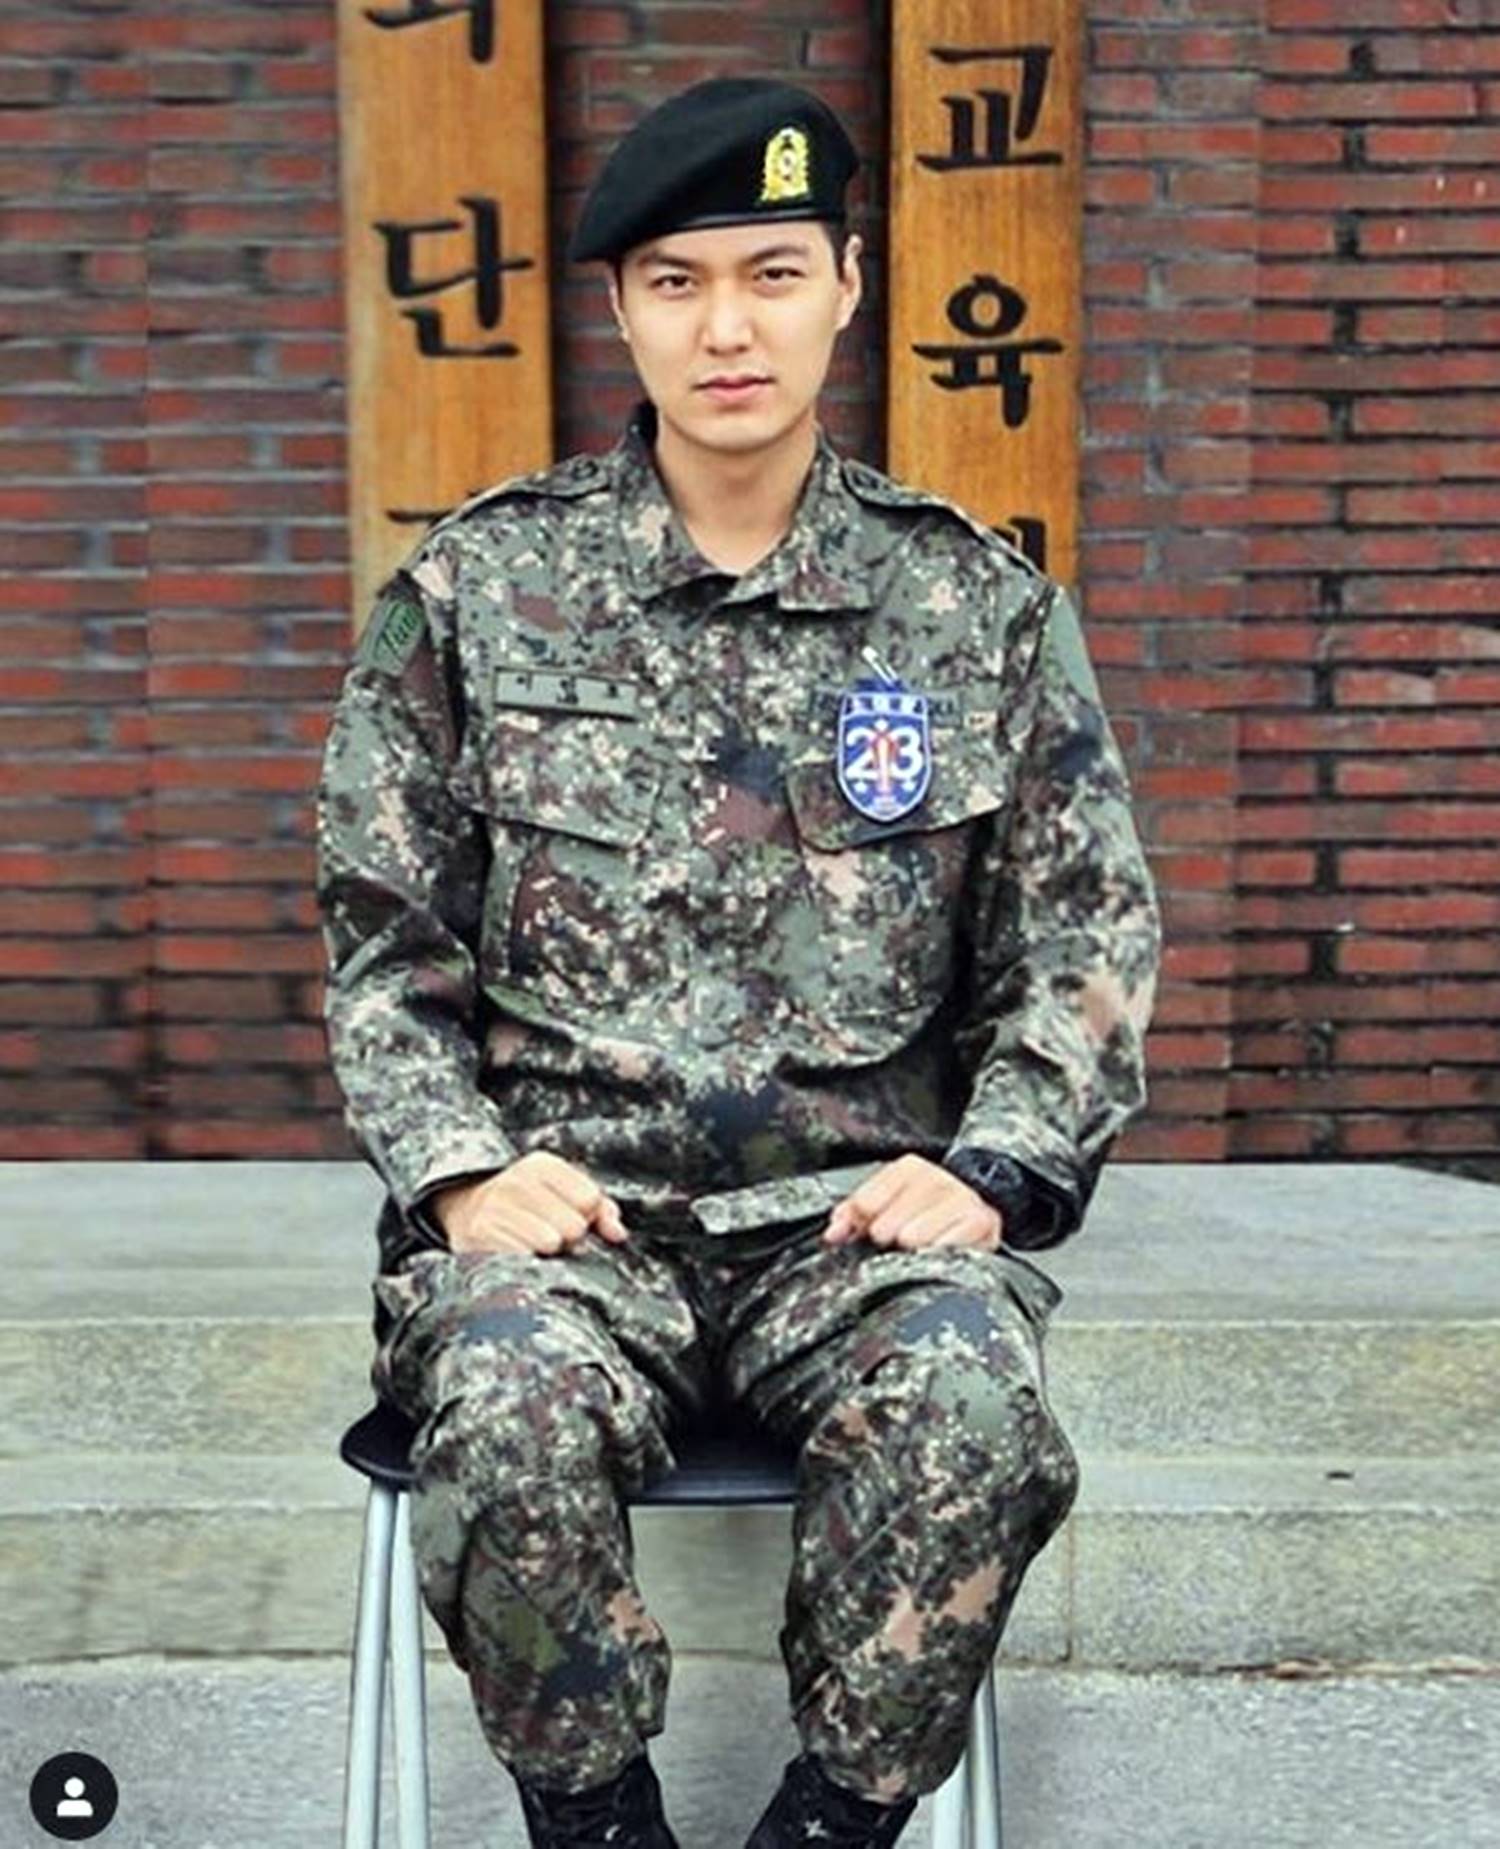 Lee Min Ho military discharge Hallyu K Dramas Kocowa actor model Korean